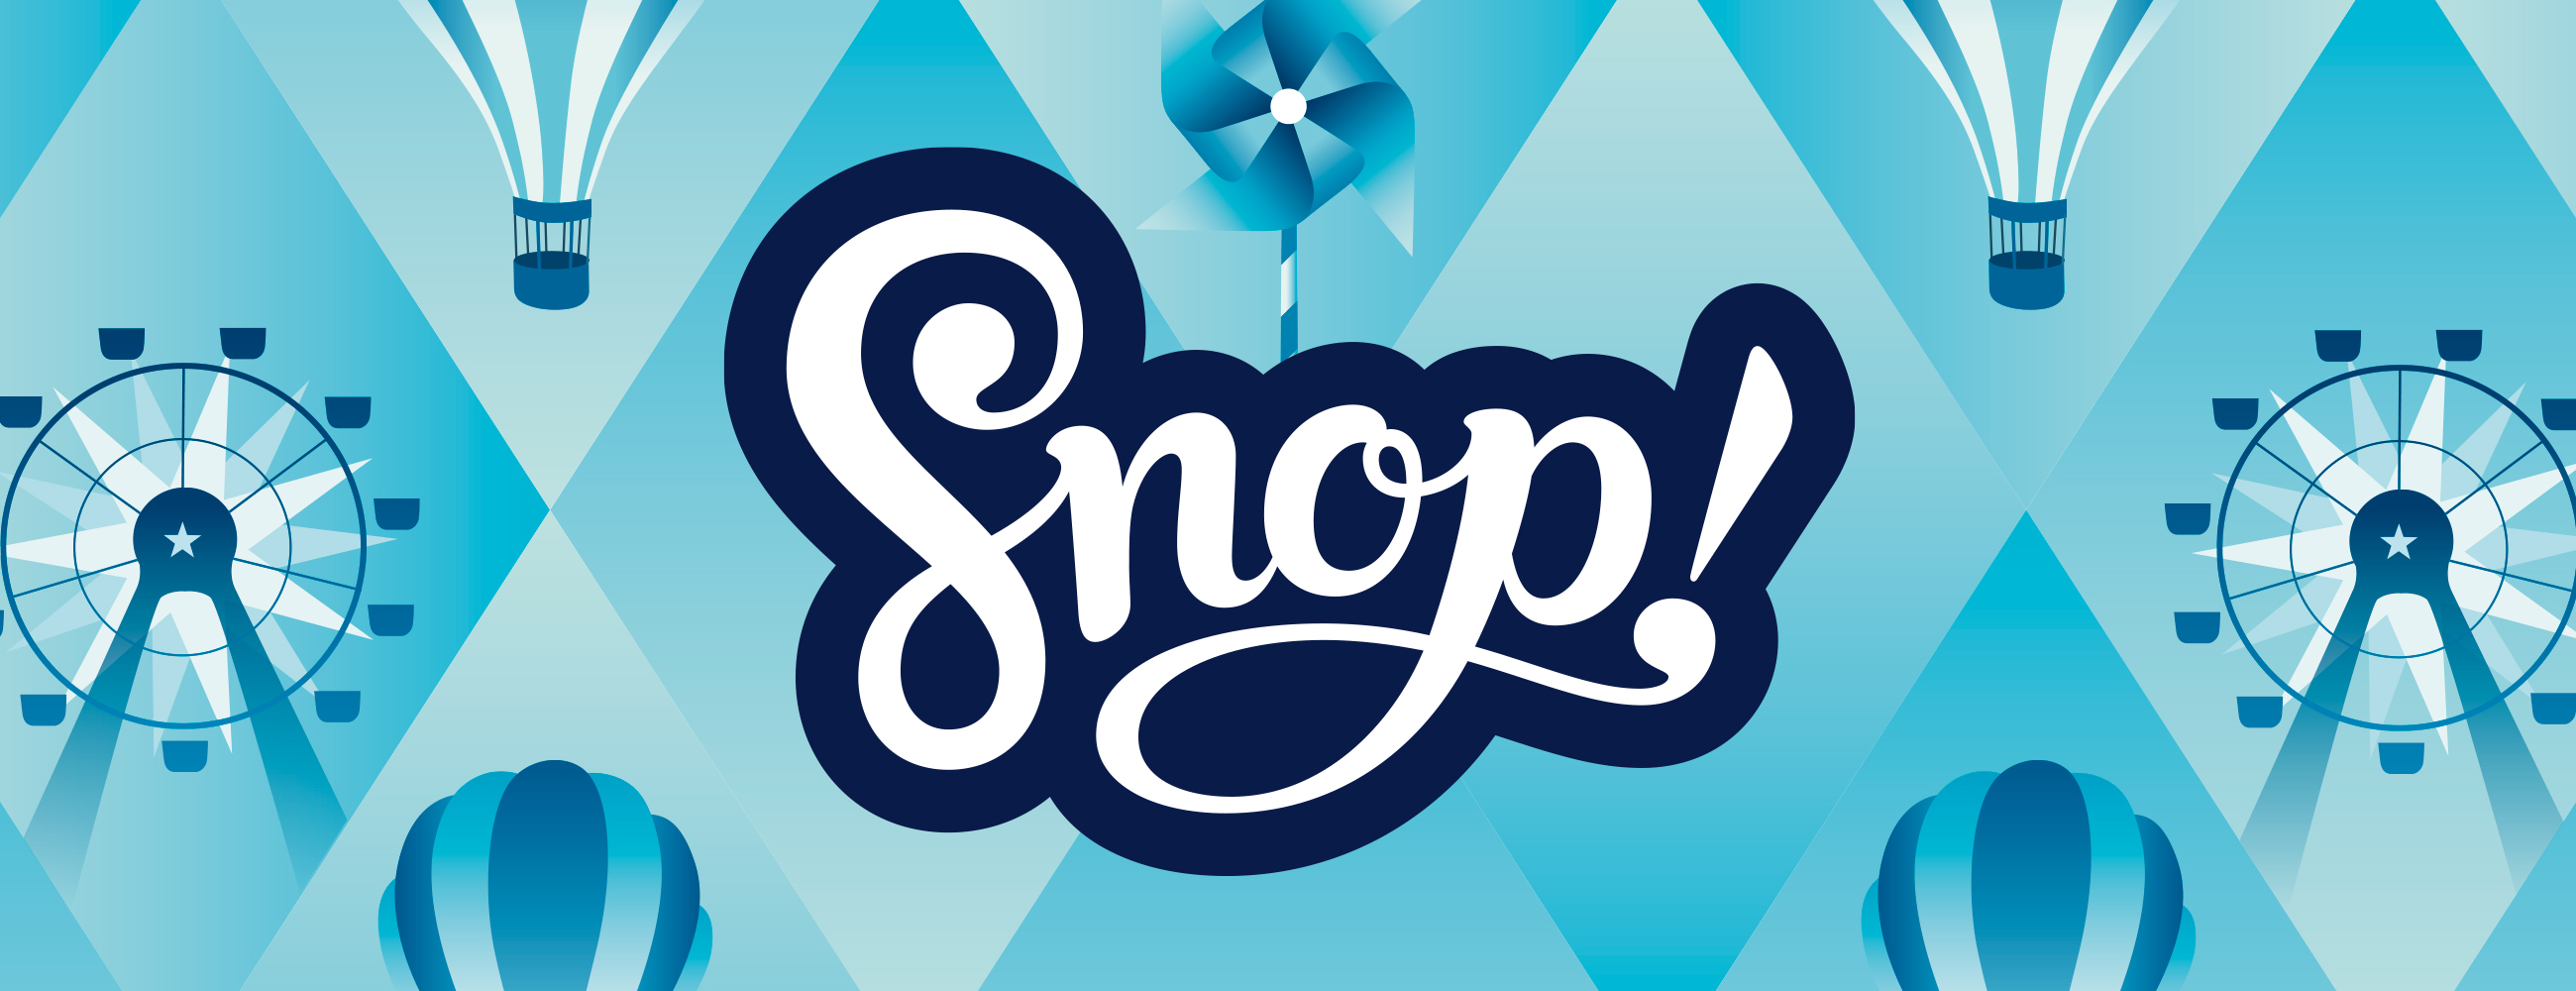 Unil Snop smågodt candy logo. Visuell identitet Visual identity.